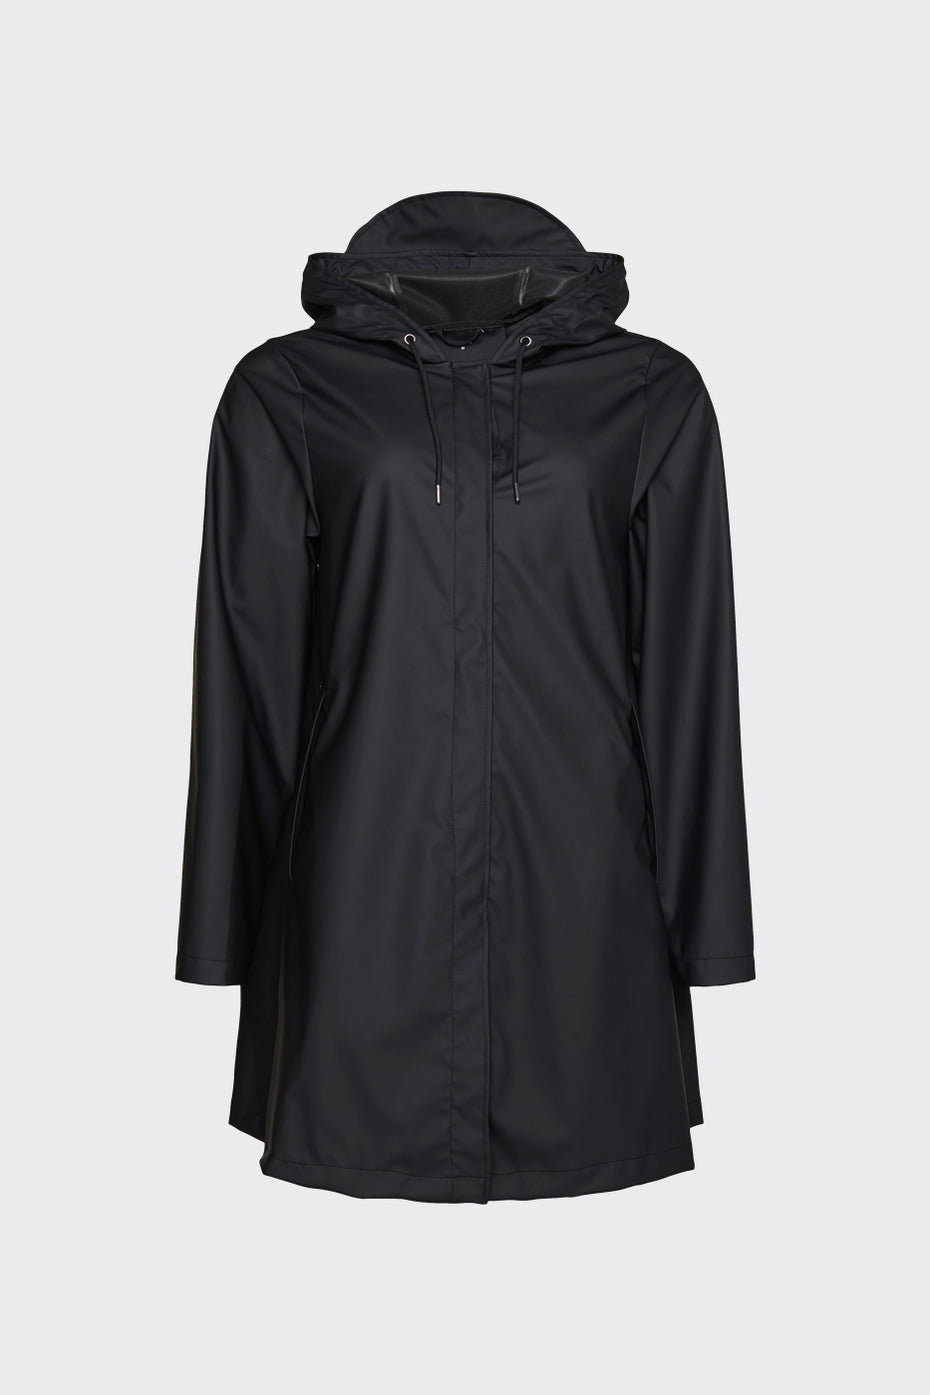 Rains Women A-Line Jacket - Black